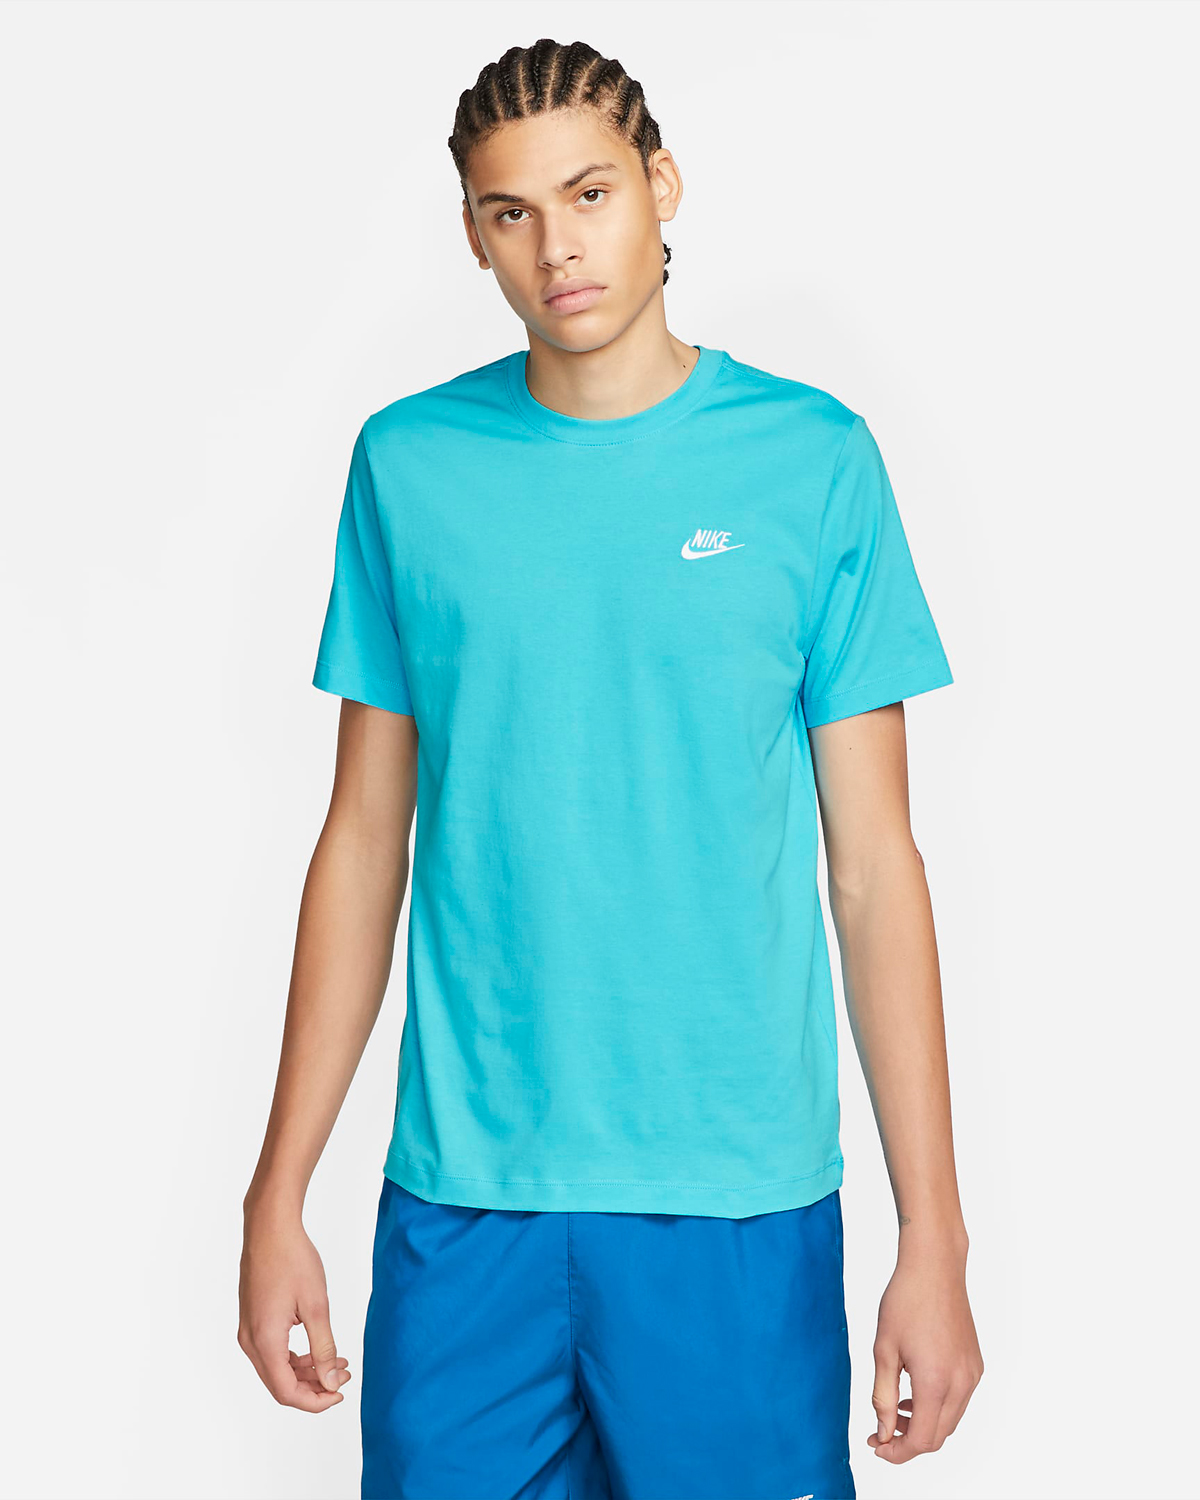 Nike Air Max 1 Corduroy Baltic Blue Shirts Clothing Outfits